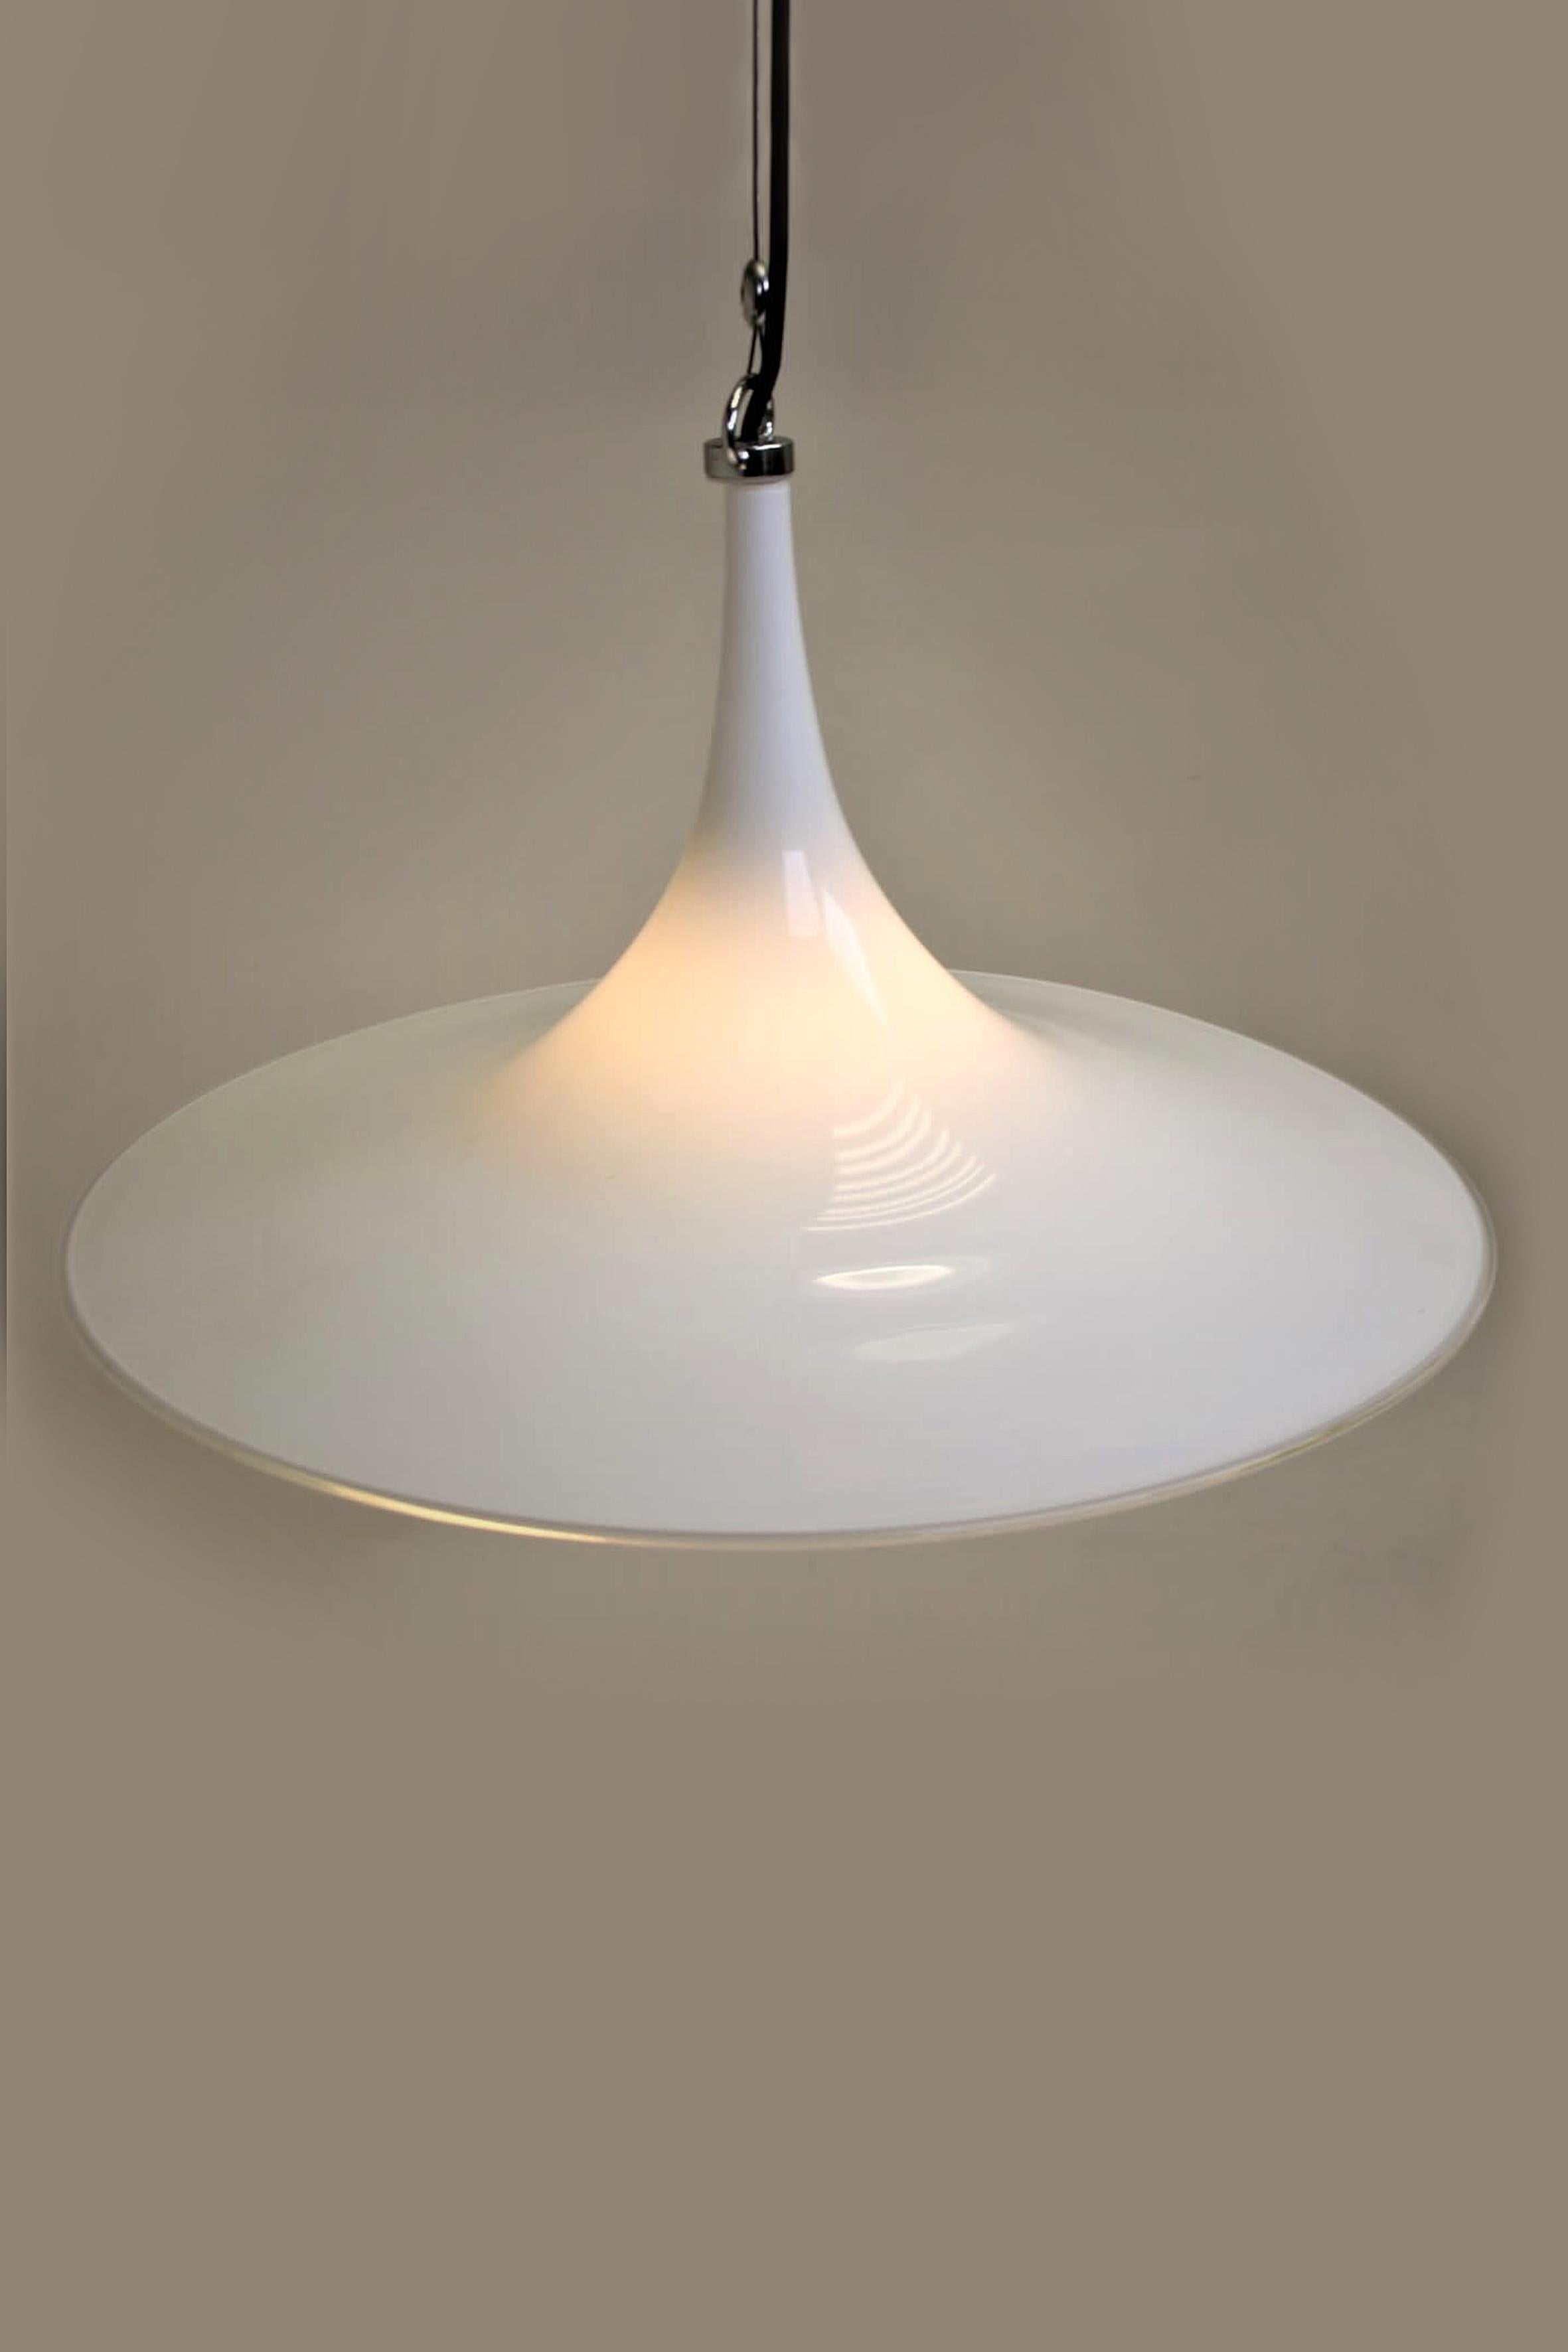 Lino Tagliapietra Pendant Lamp Made by Efferte Magia, 1980 Italy For Sale 3